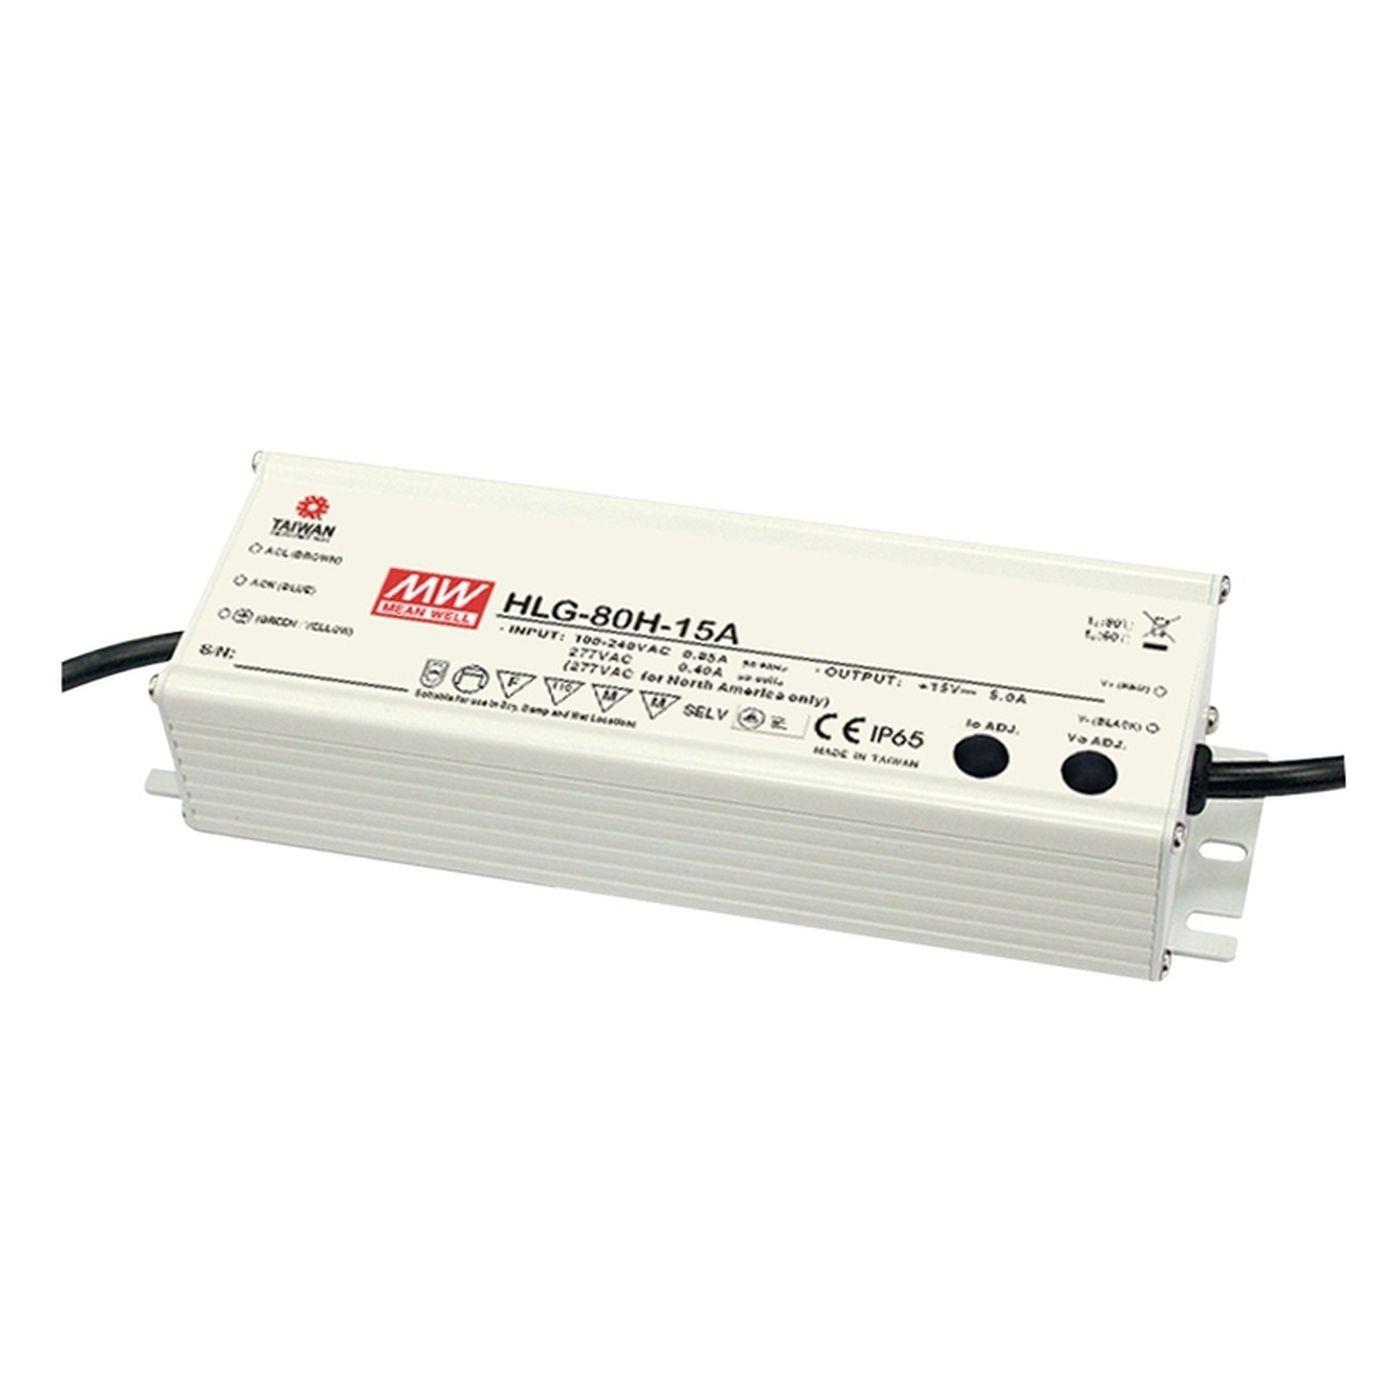 HLG-80H-24B 81W 24V 3,4A LED power supply Transformer Driver IP67 Dimmable 0-10V PWM